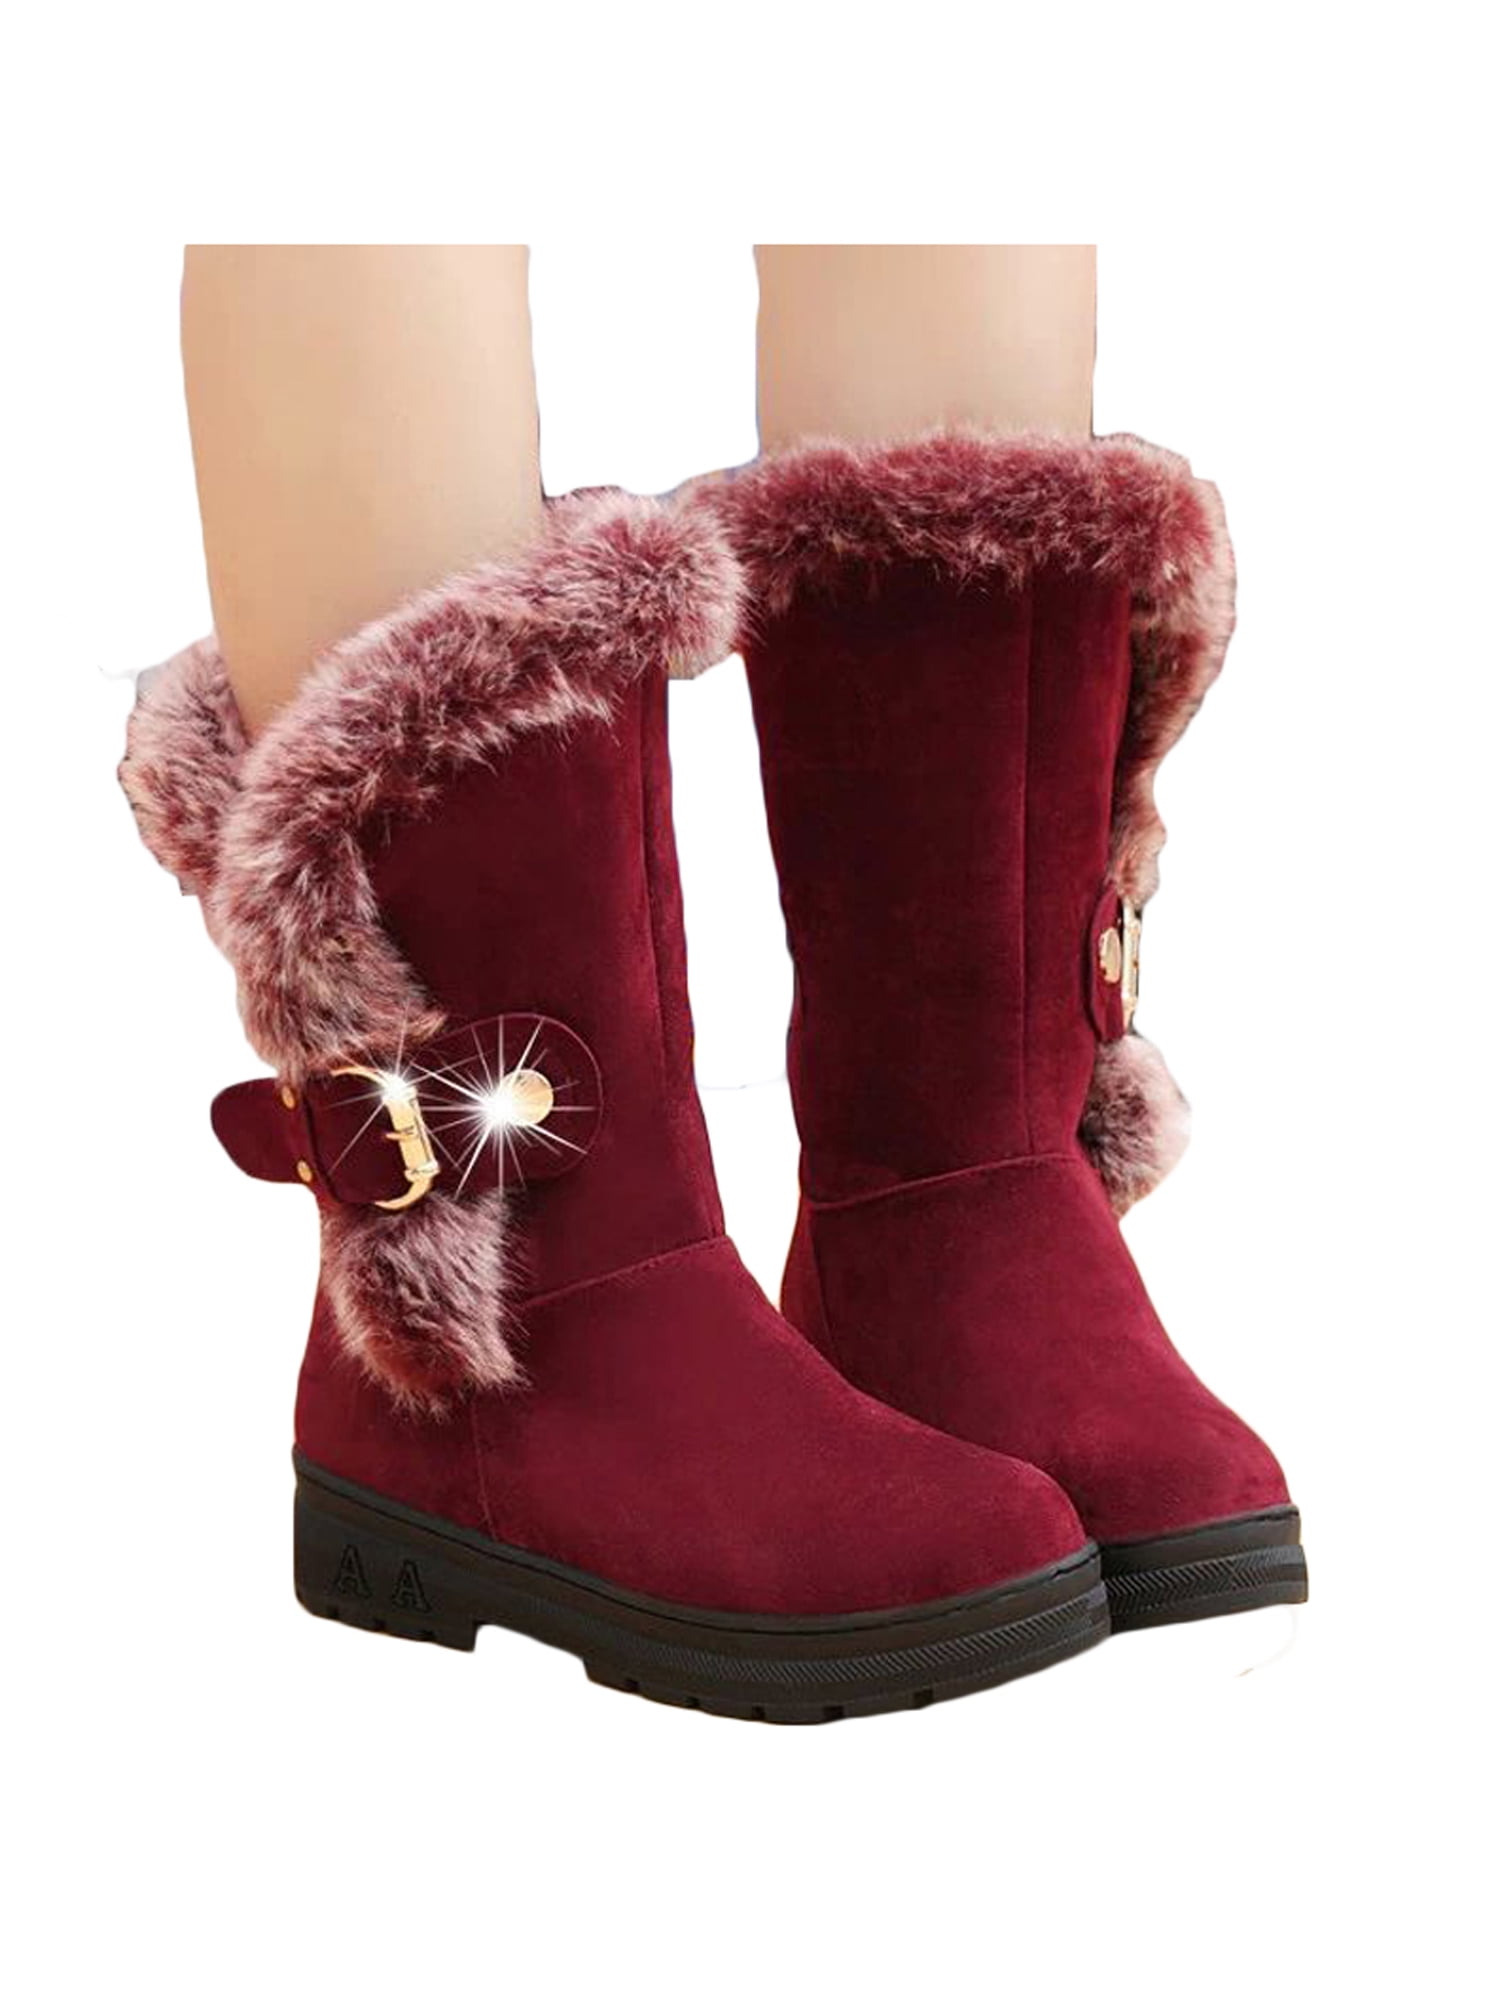 Xmas Women's Girls Winter Warm Suede Fur Lined Mid-calf Snow Flat Short Boots 